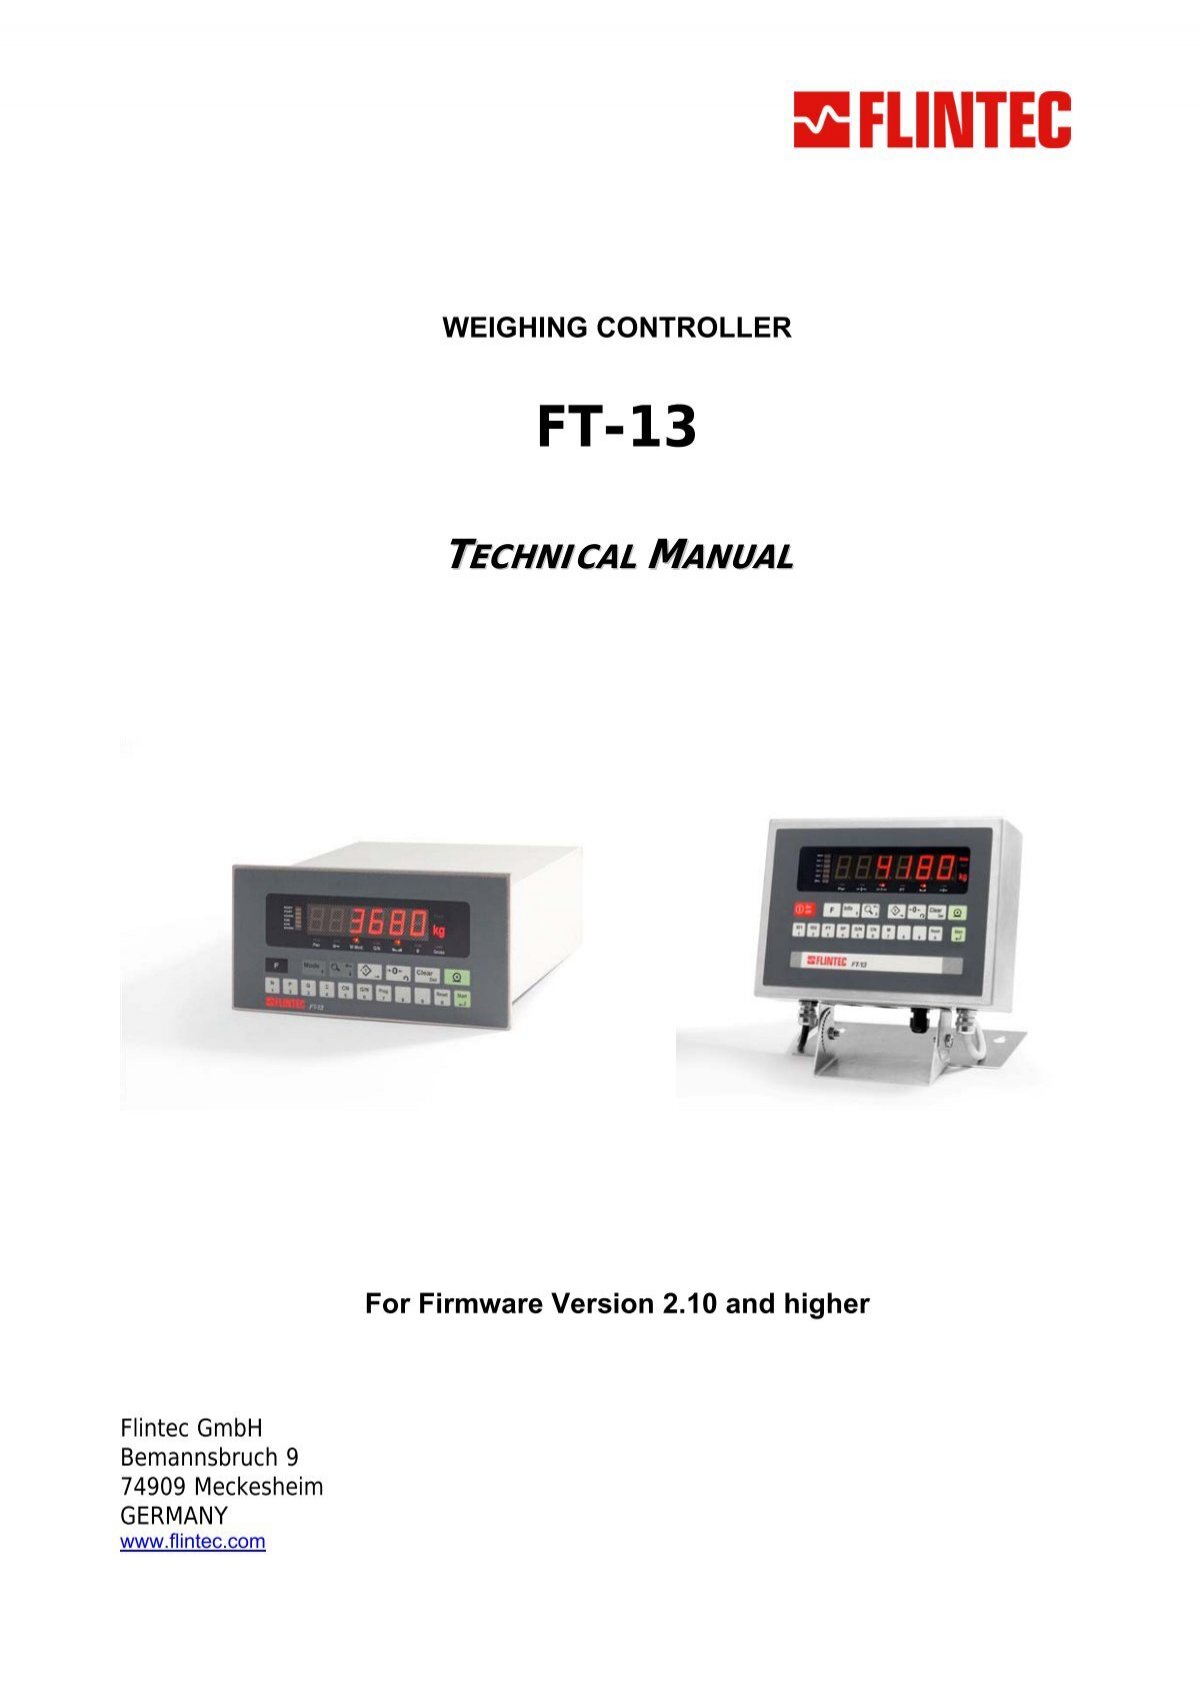 ft-13 technical manual - Flintec Polska